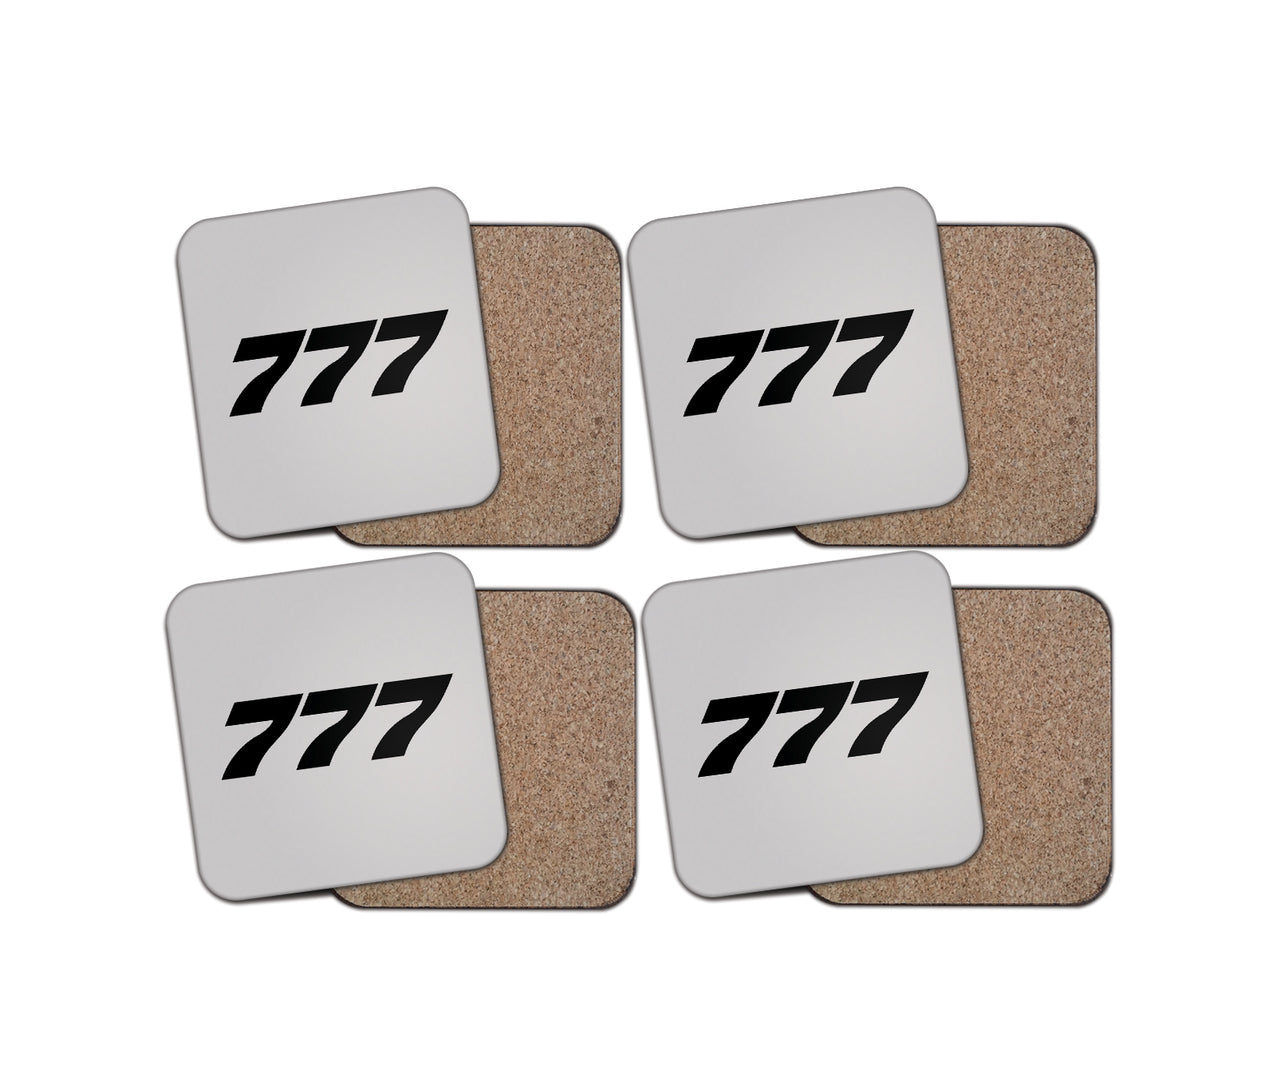 777 Flat Text Designed Coasters